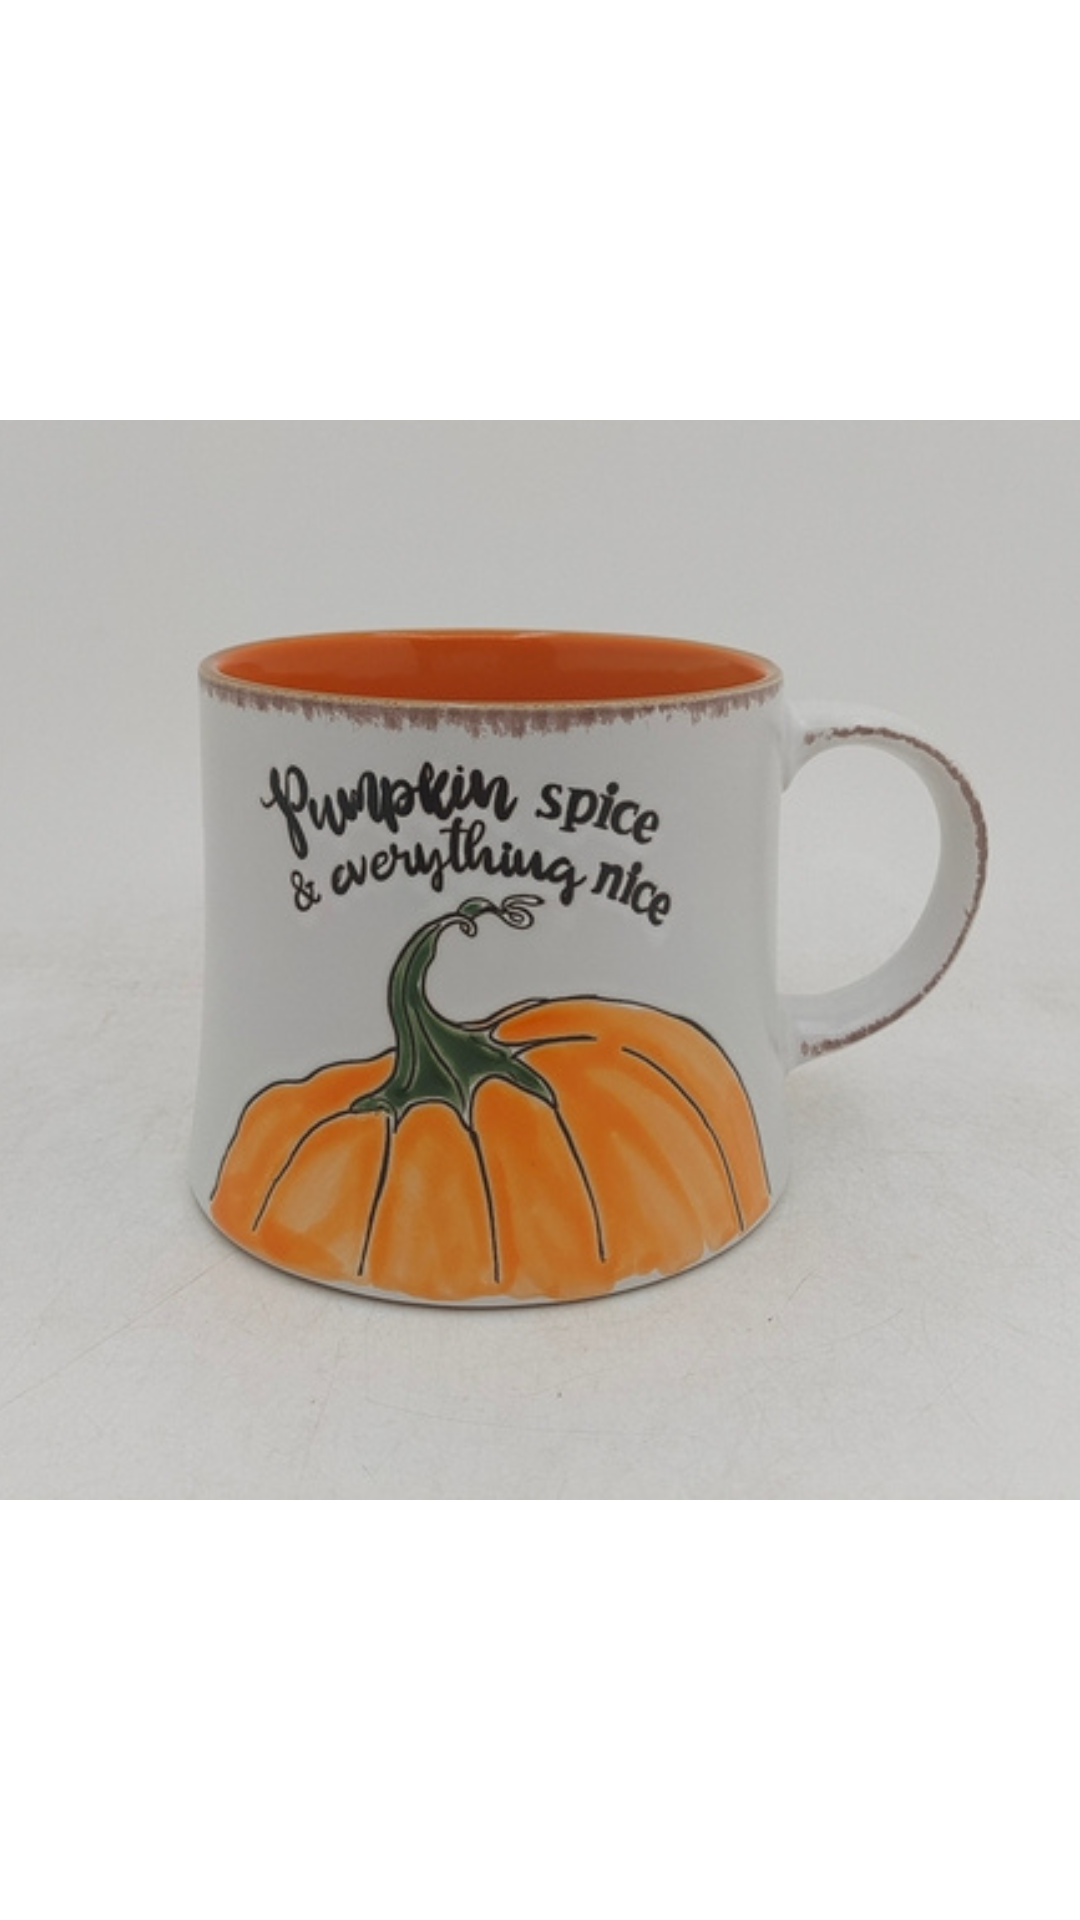 Pumpkin Spice Everything Nice Mug